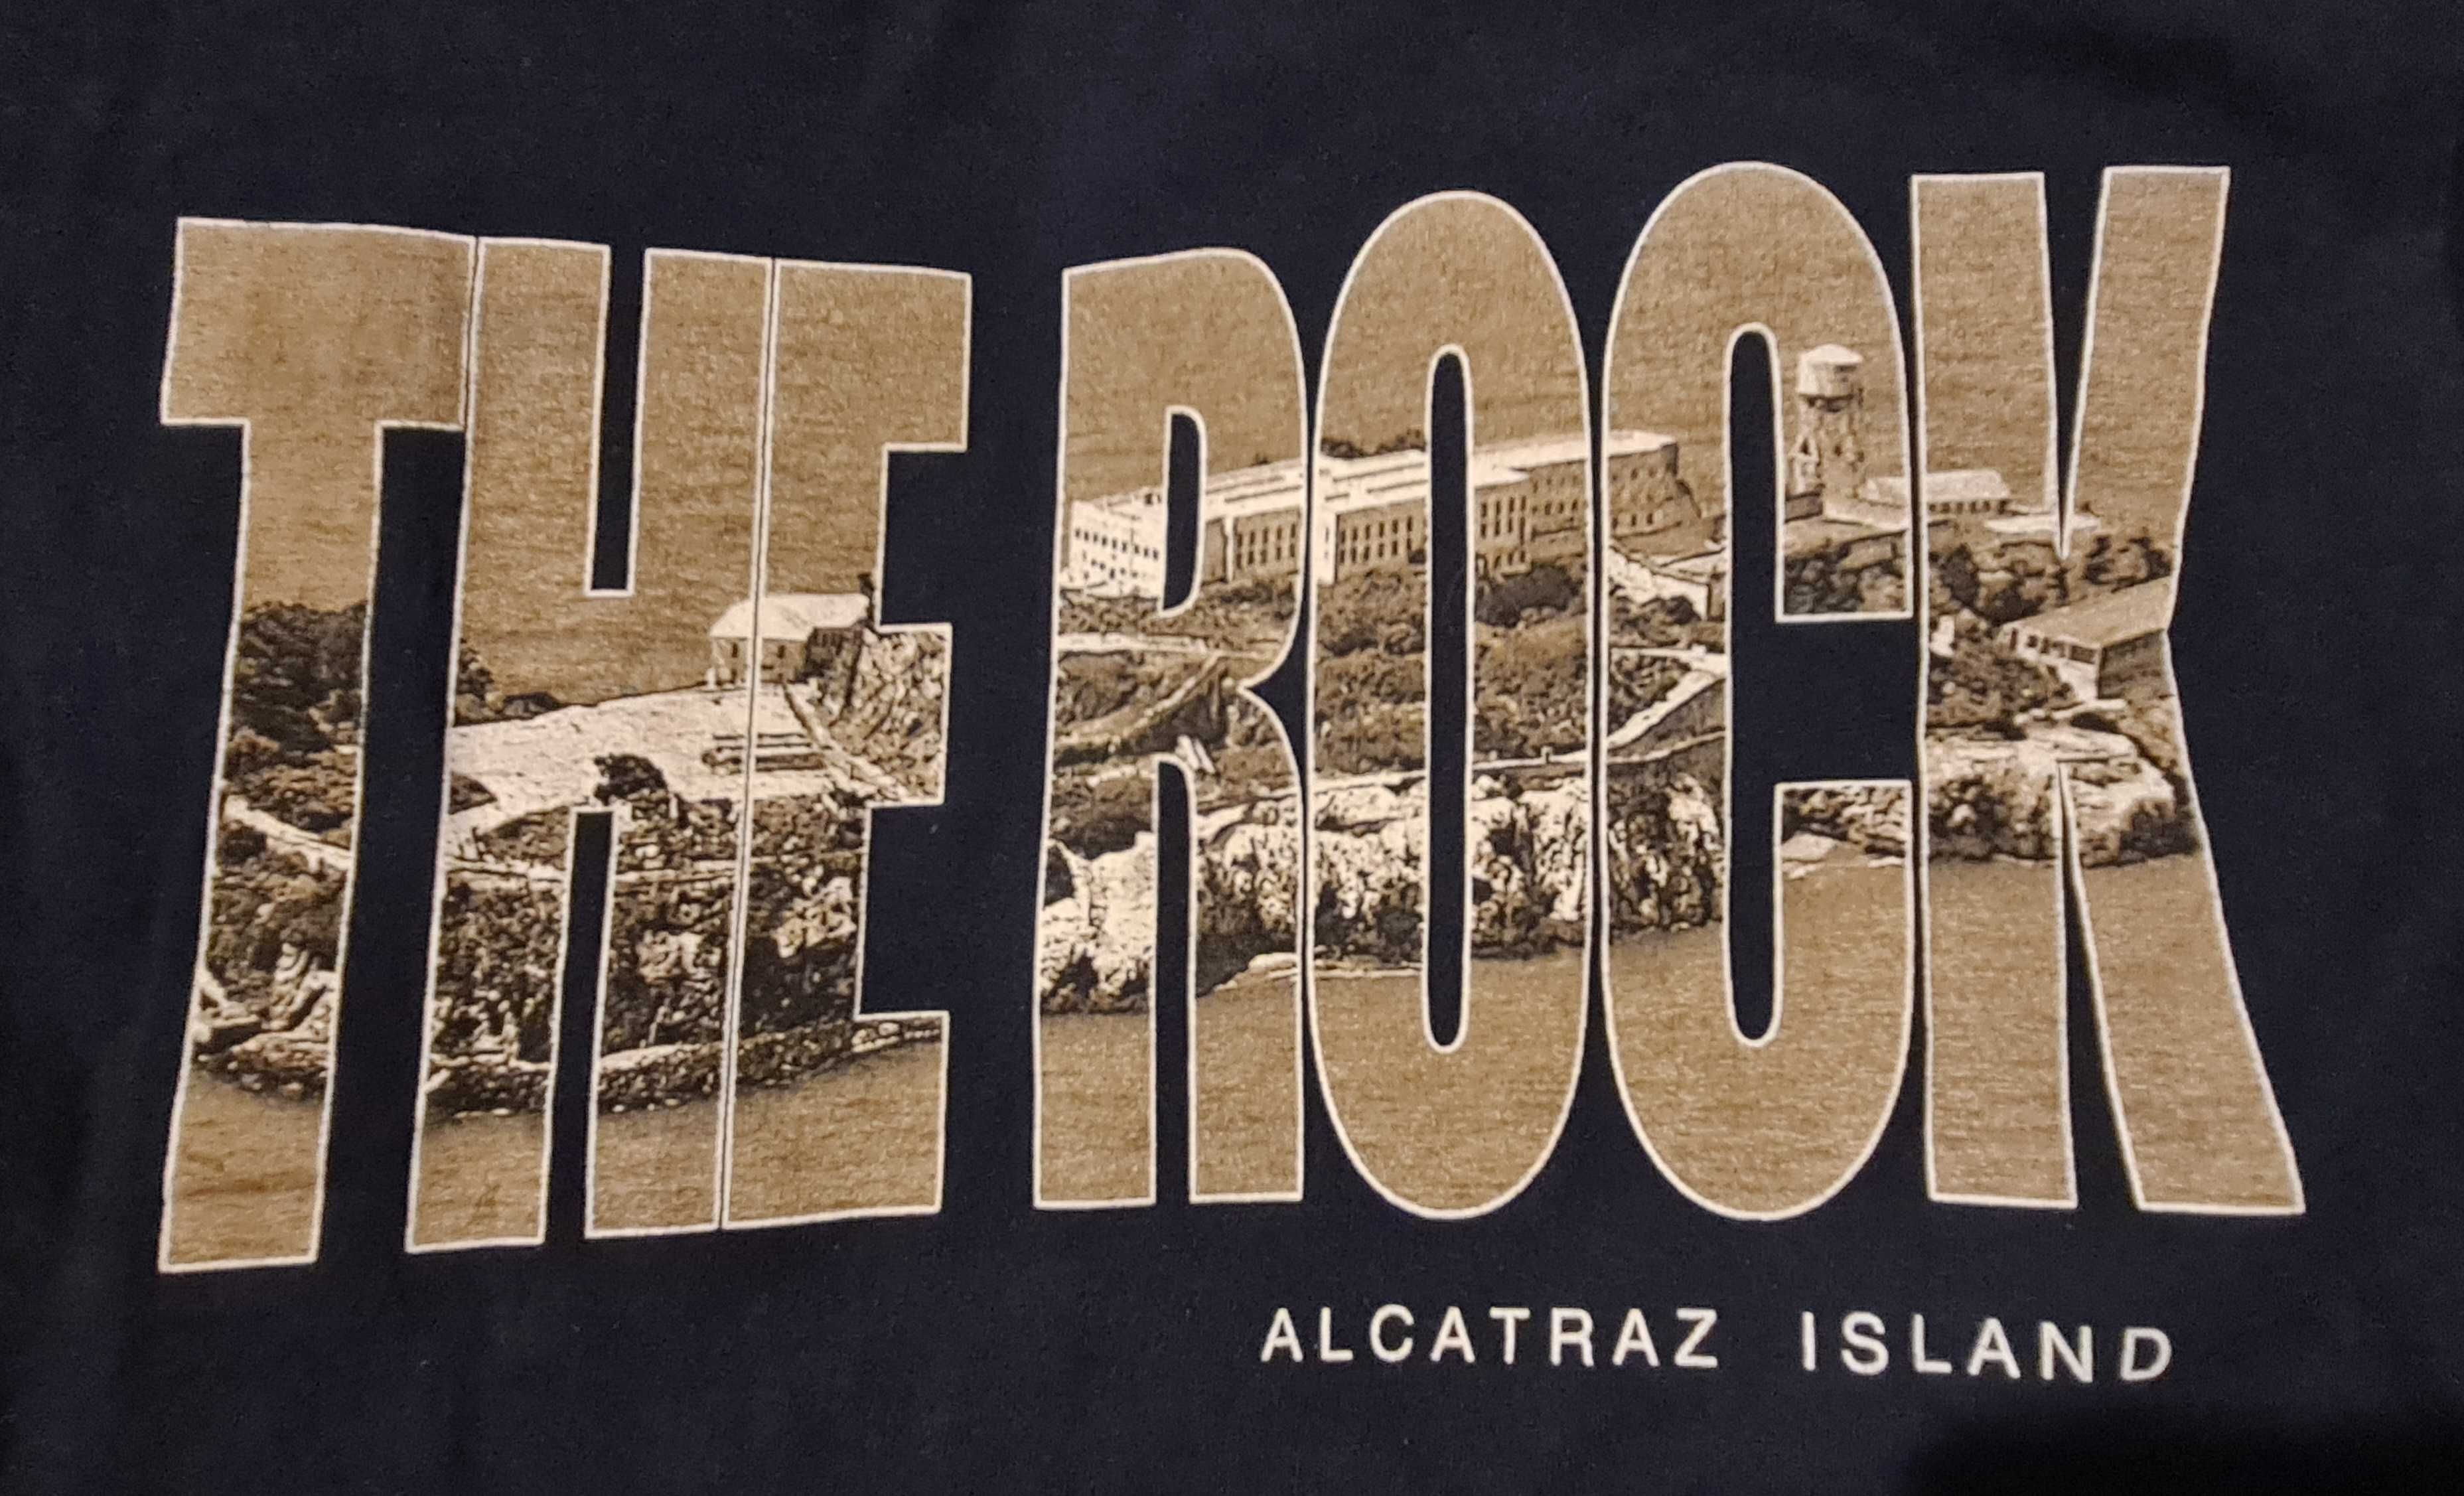 THE ROCK Alcatraz Island koszulka S nowa